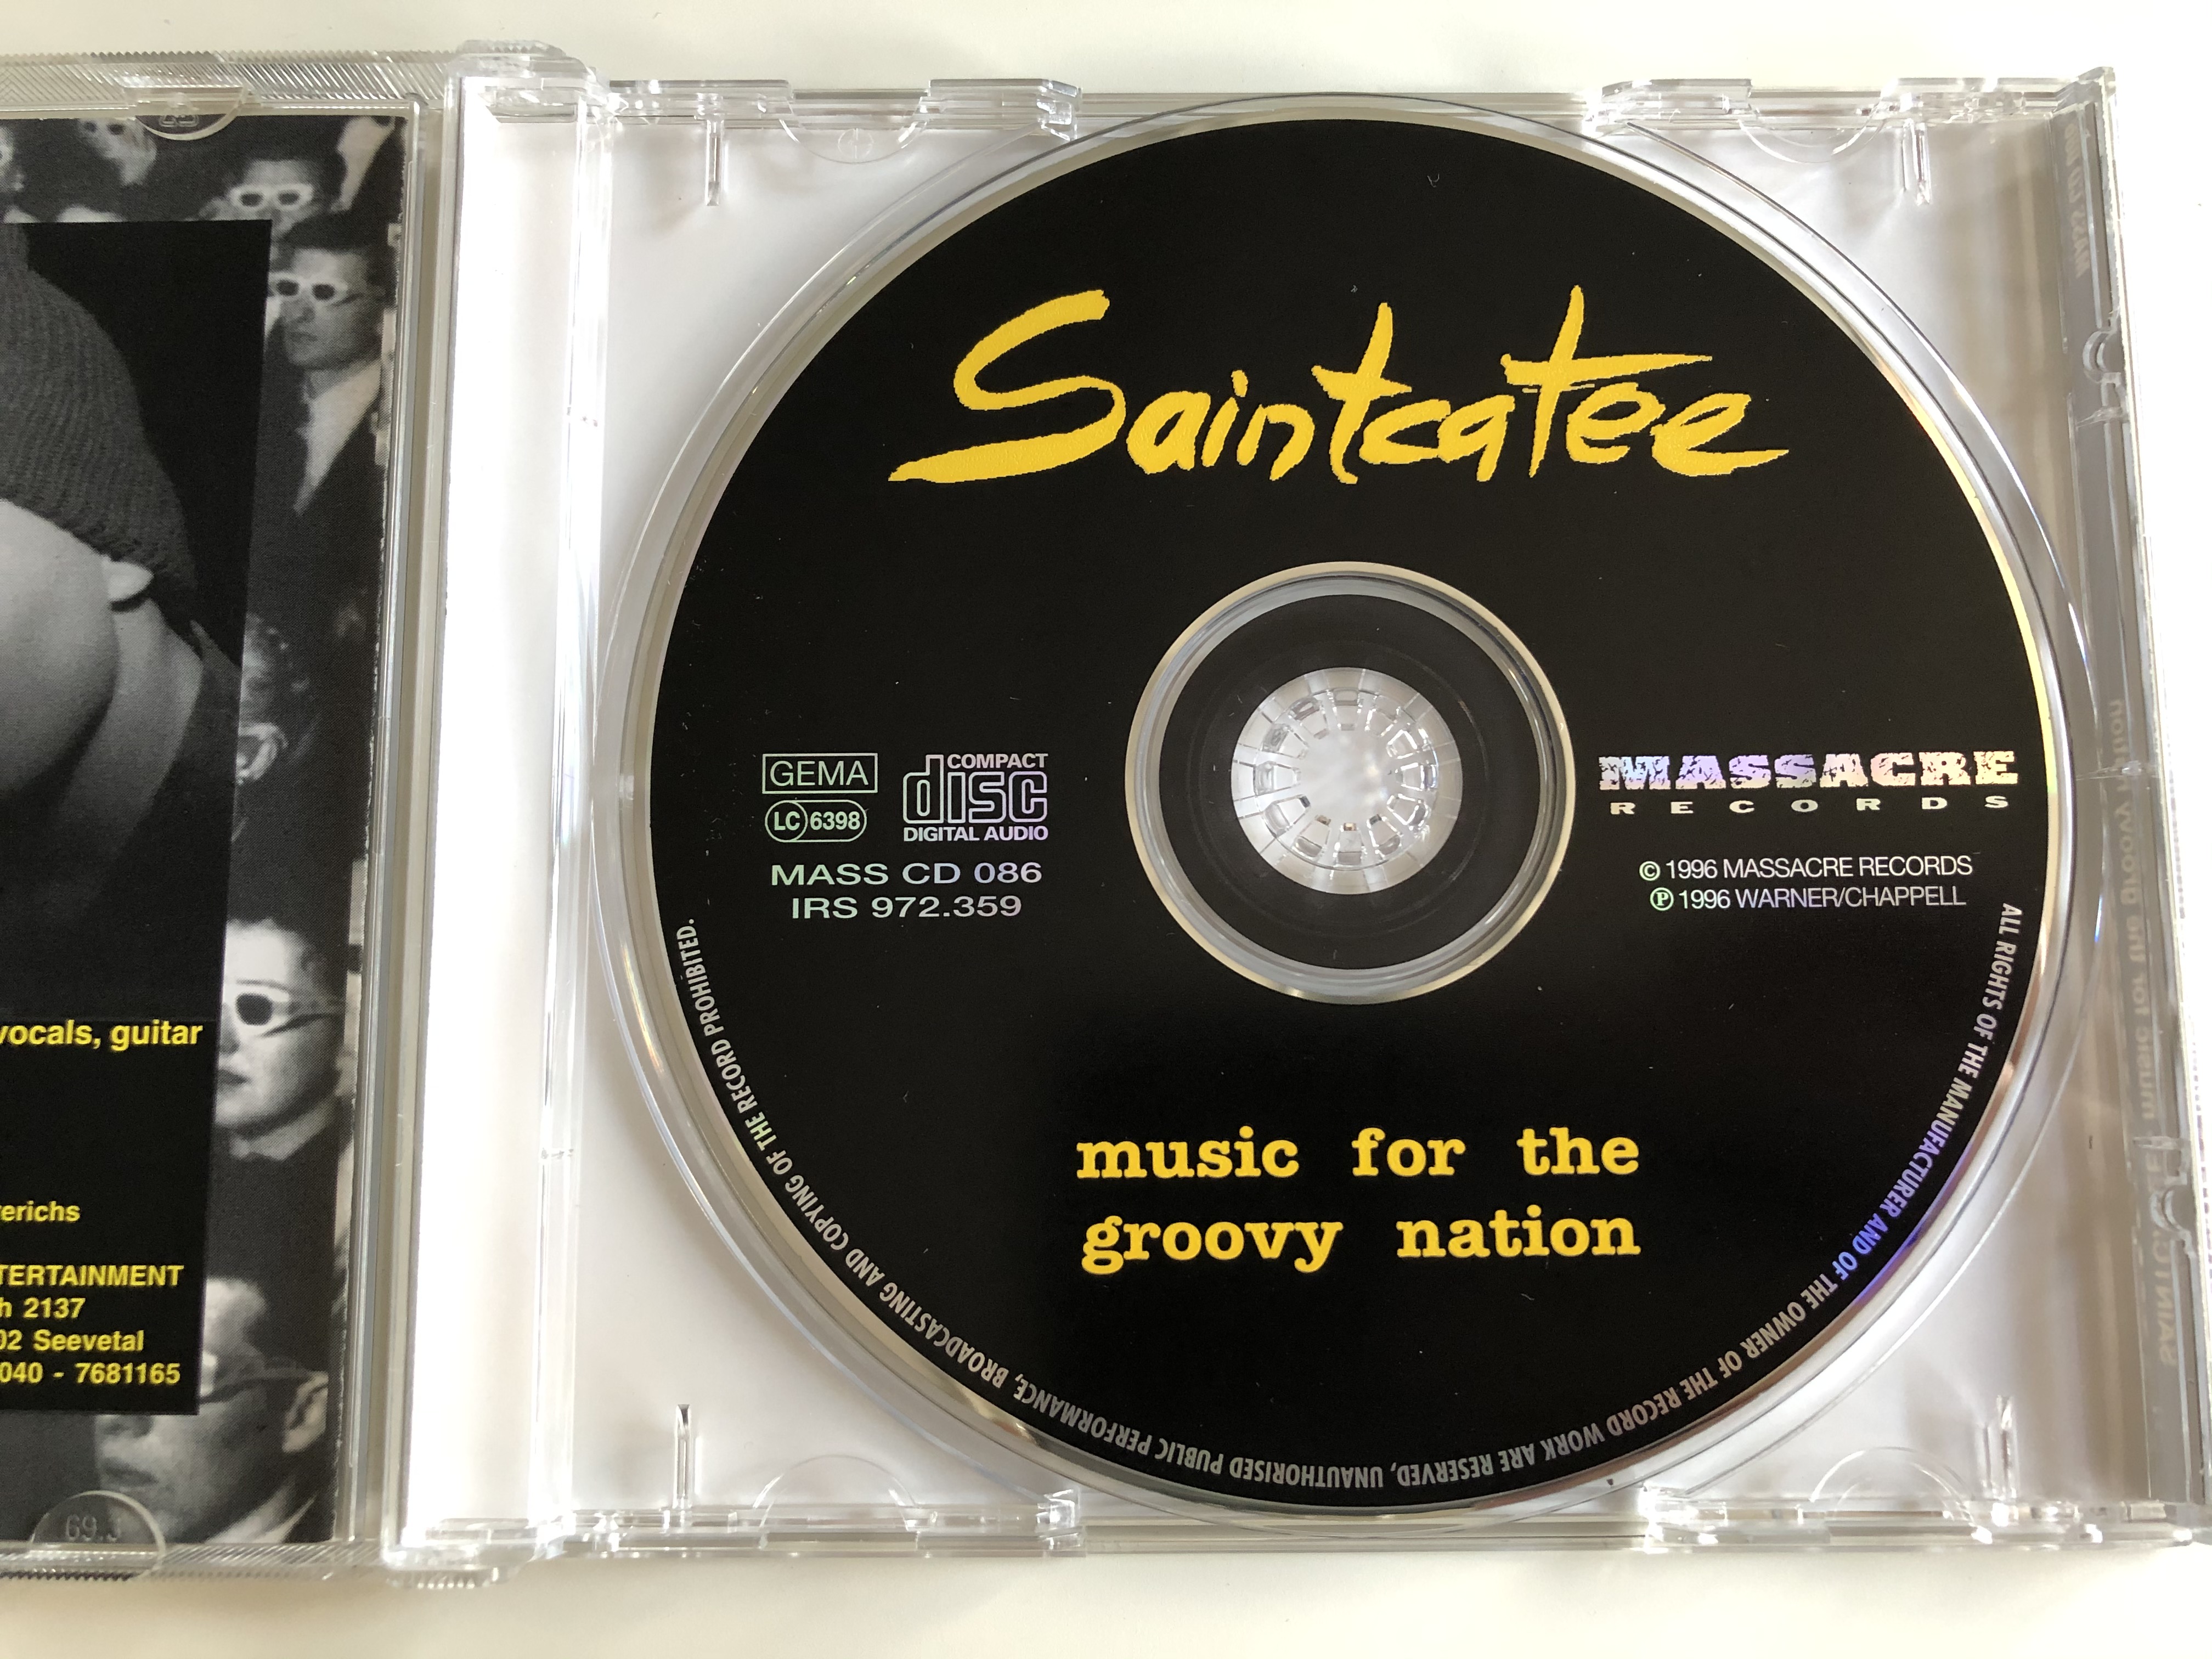 saintcatee-music-for-the-groovy-nation-massacre-records-audio-cd-1996-mass-cd-086-4-.jpg